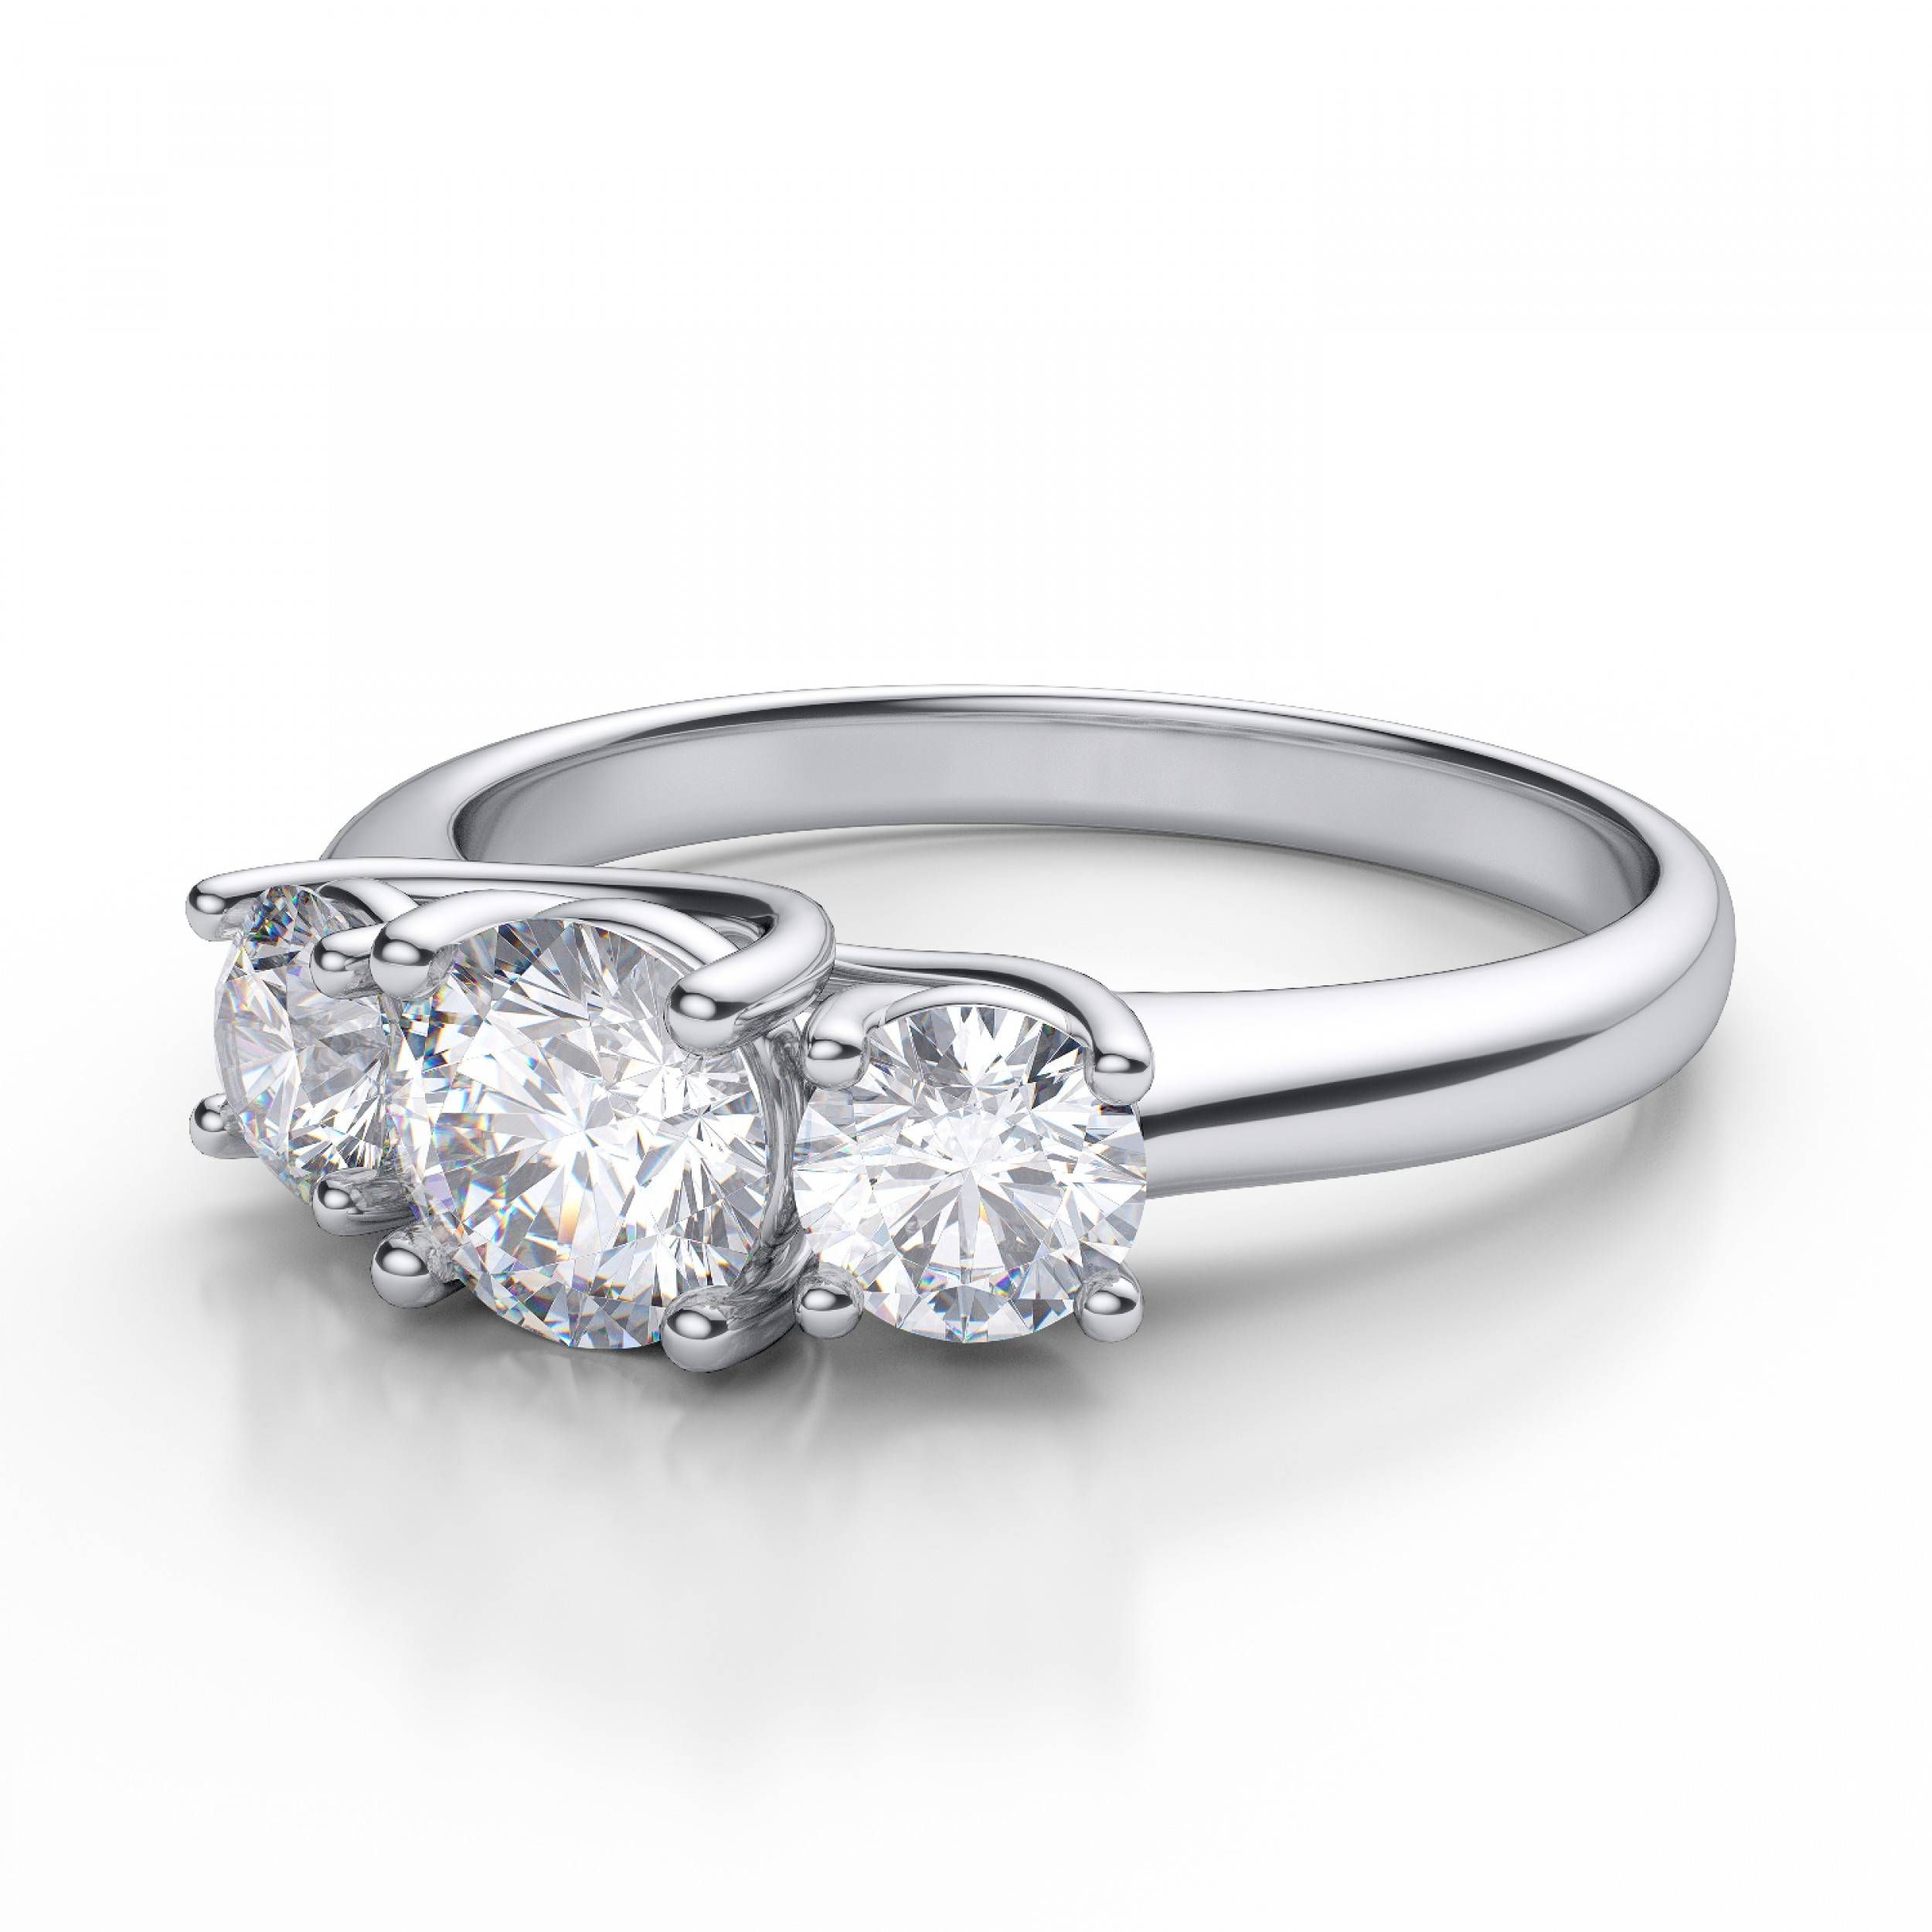 Three Stone Anniversary Diamond Rings | Wedding, Promise, Diamond Regarding 2018 3 Carat Diamond Anniversary Rings (View 3 of 25)